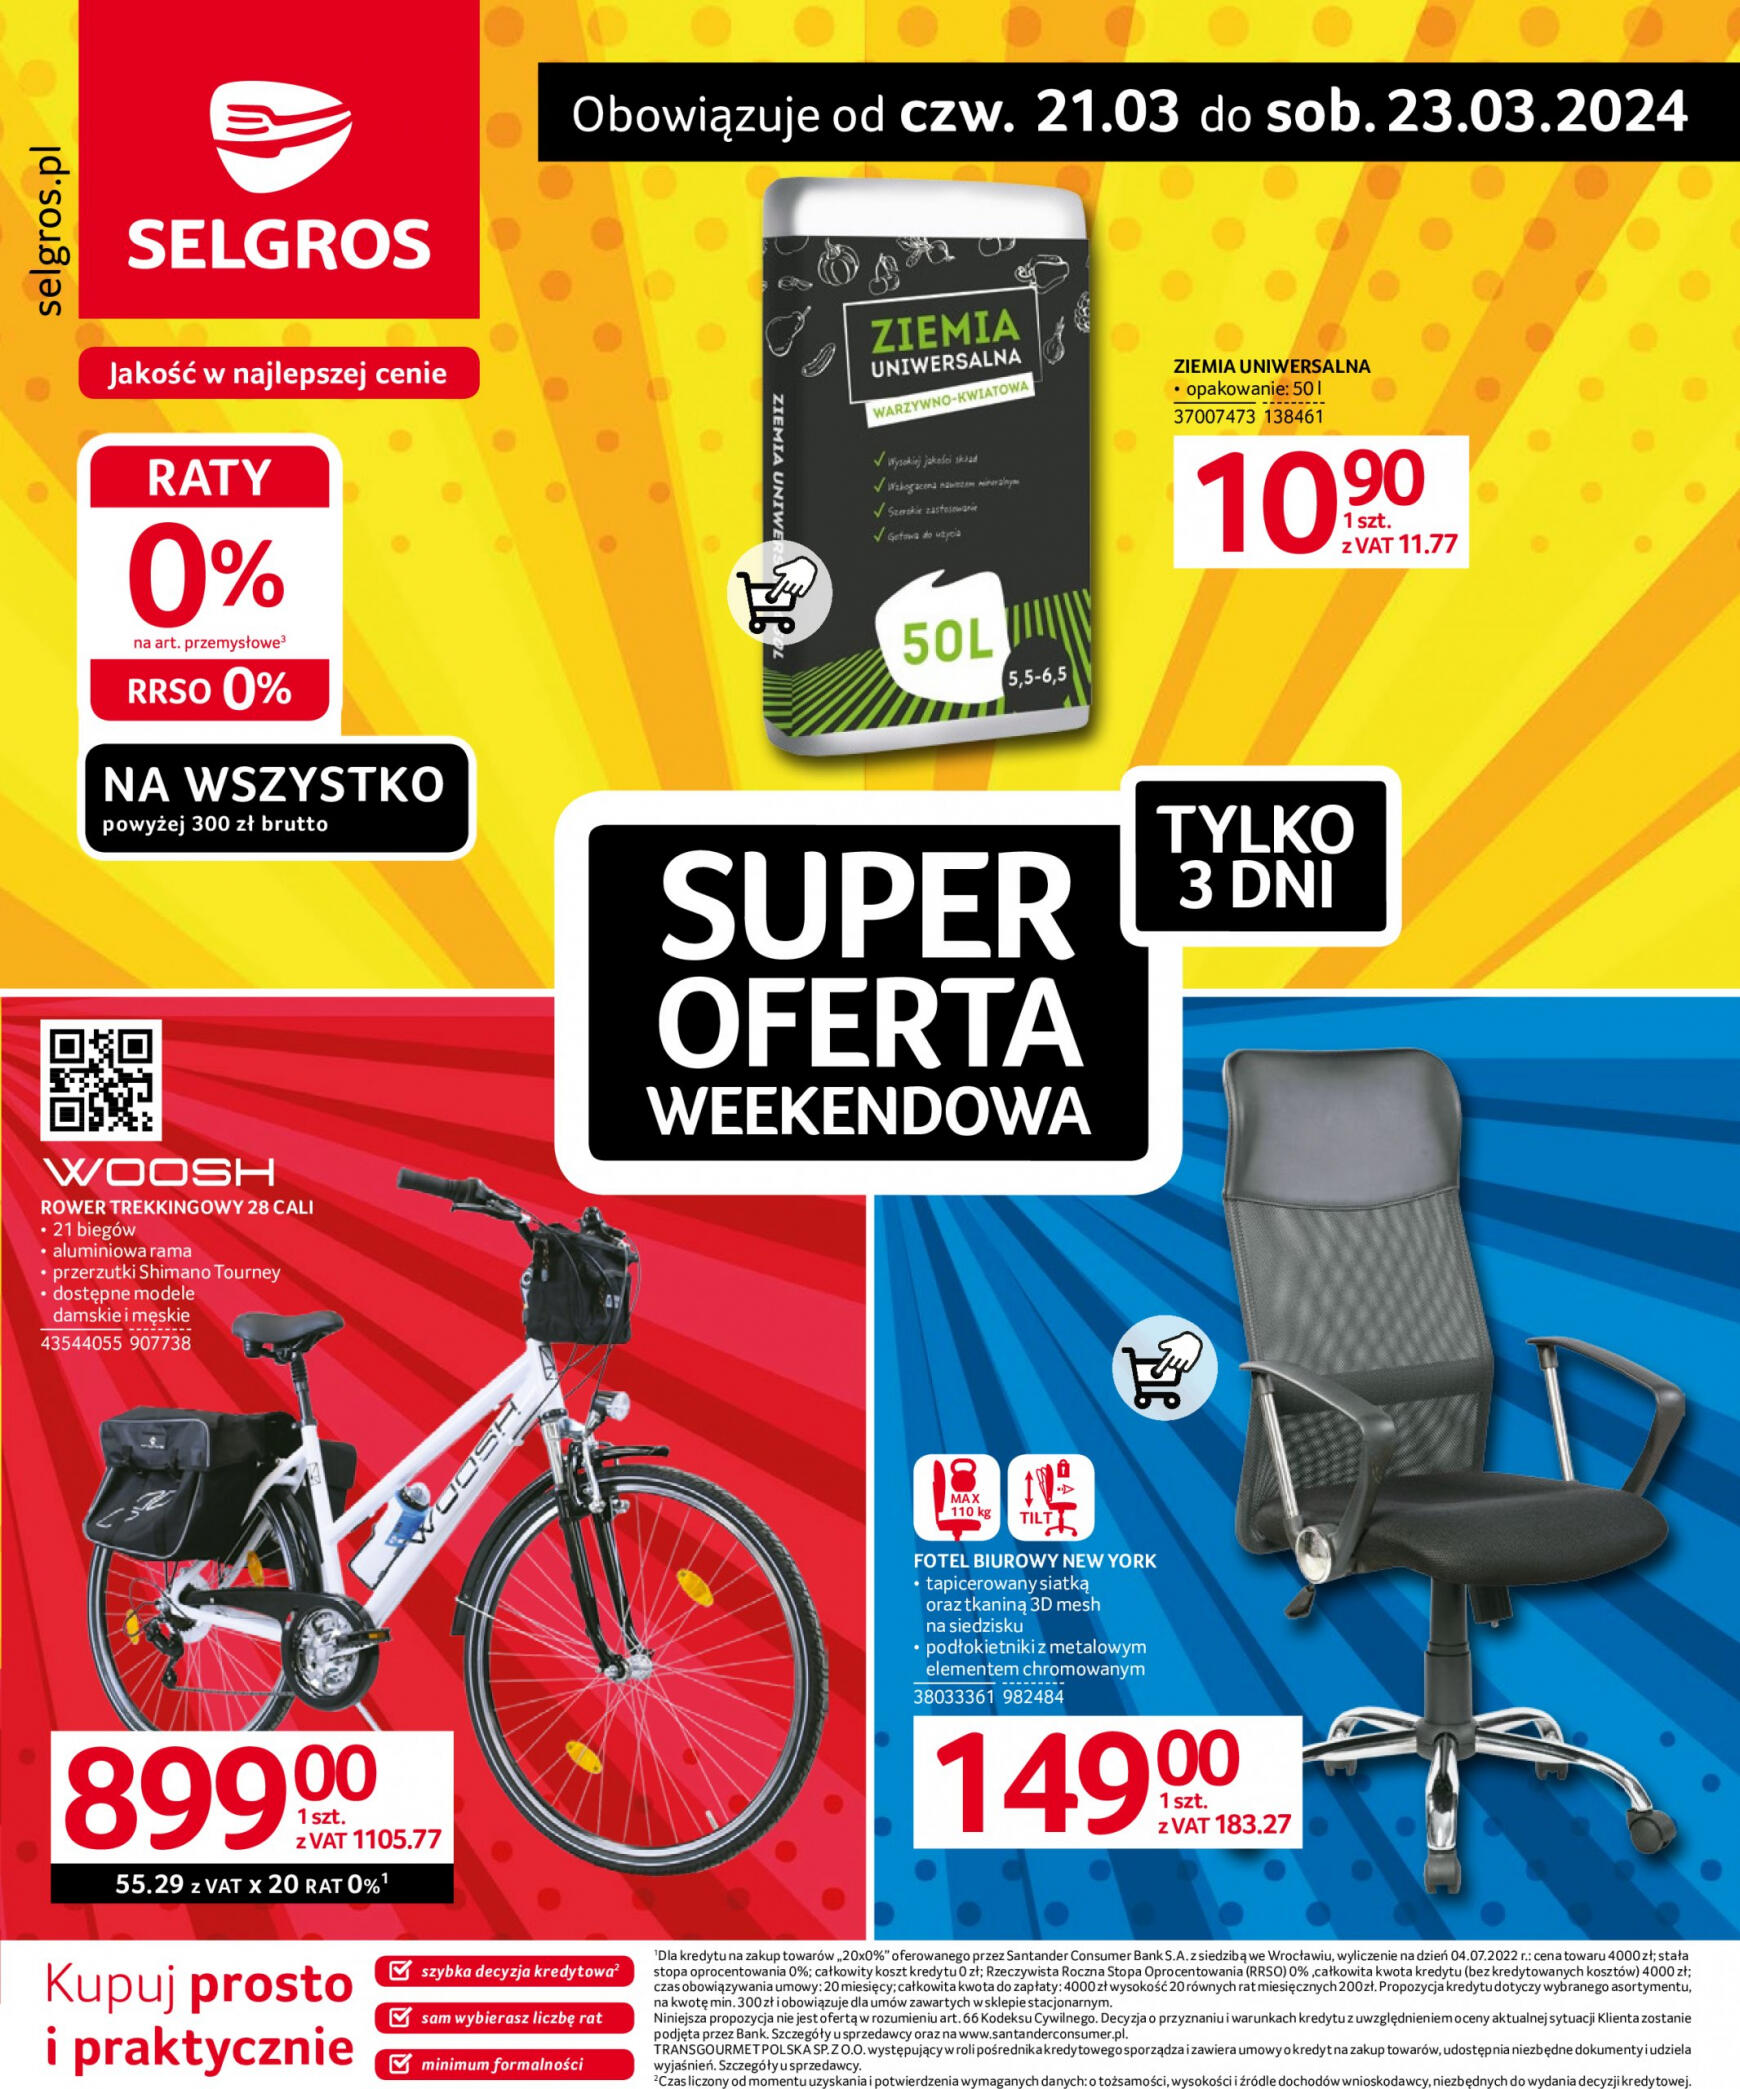 selgros - Selgros cash&carry - Super Oferta Weekendowa obowiązuje od 21.03.2024 - page: 1